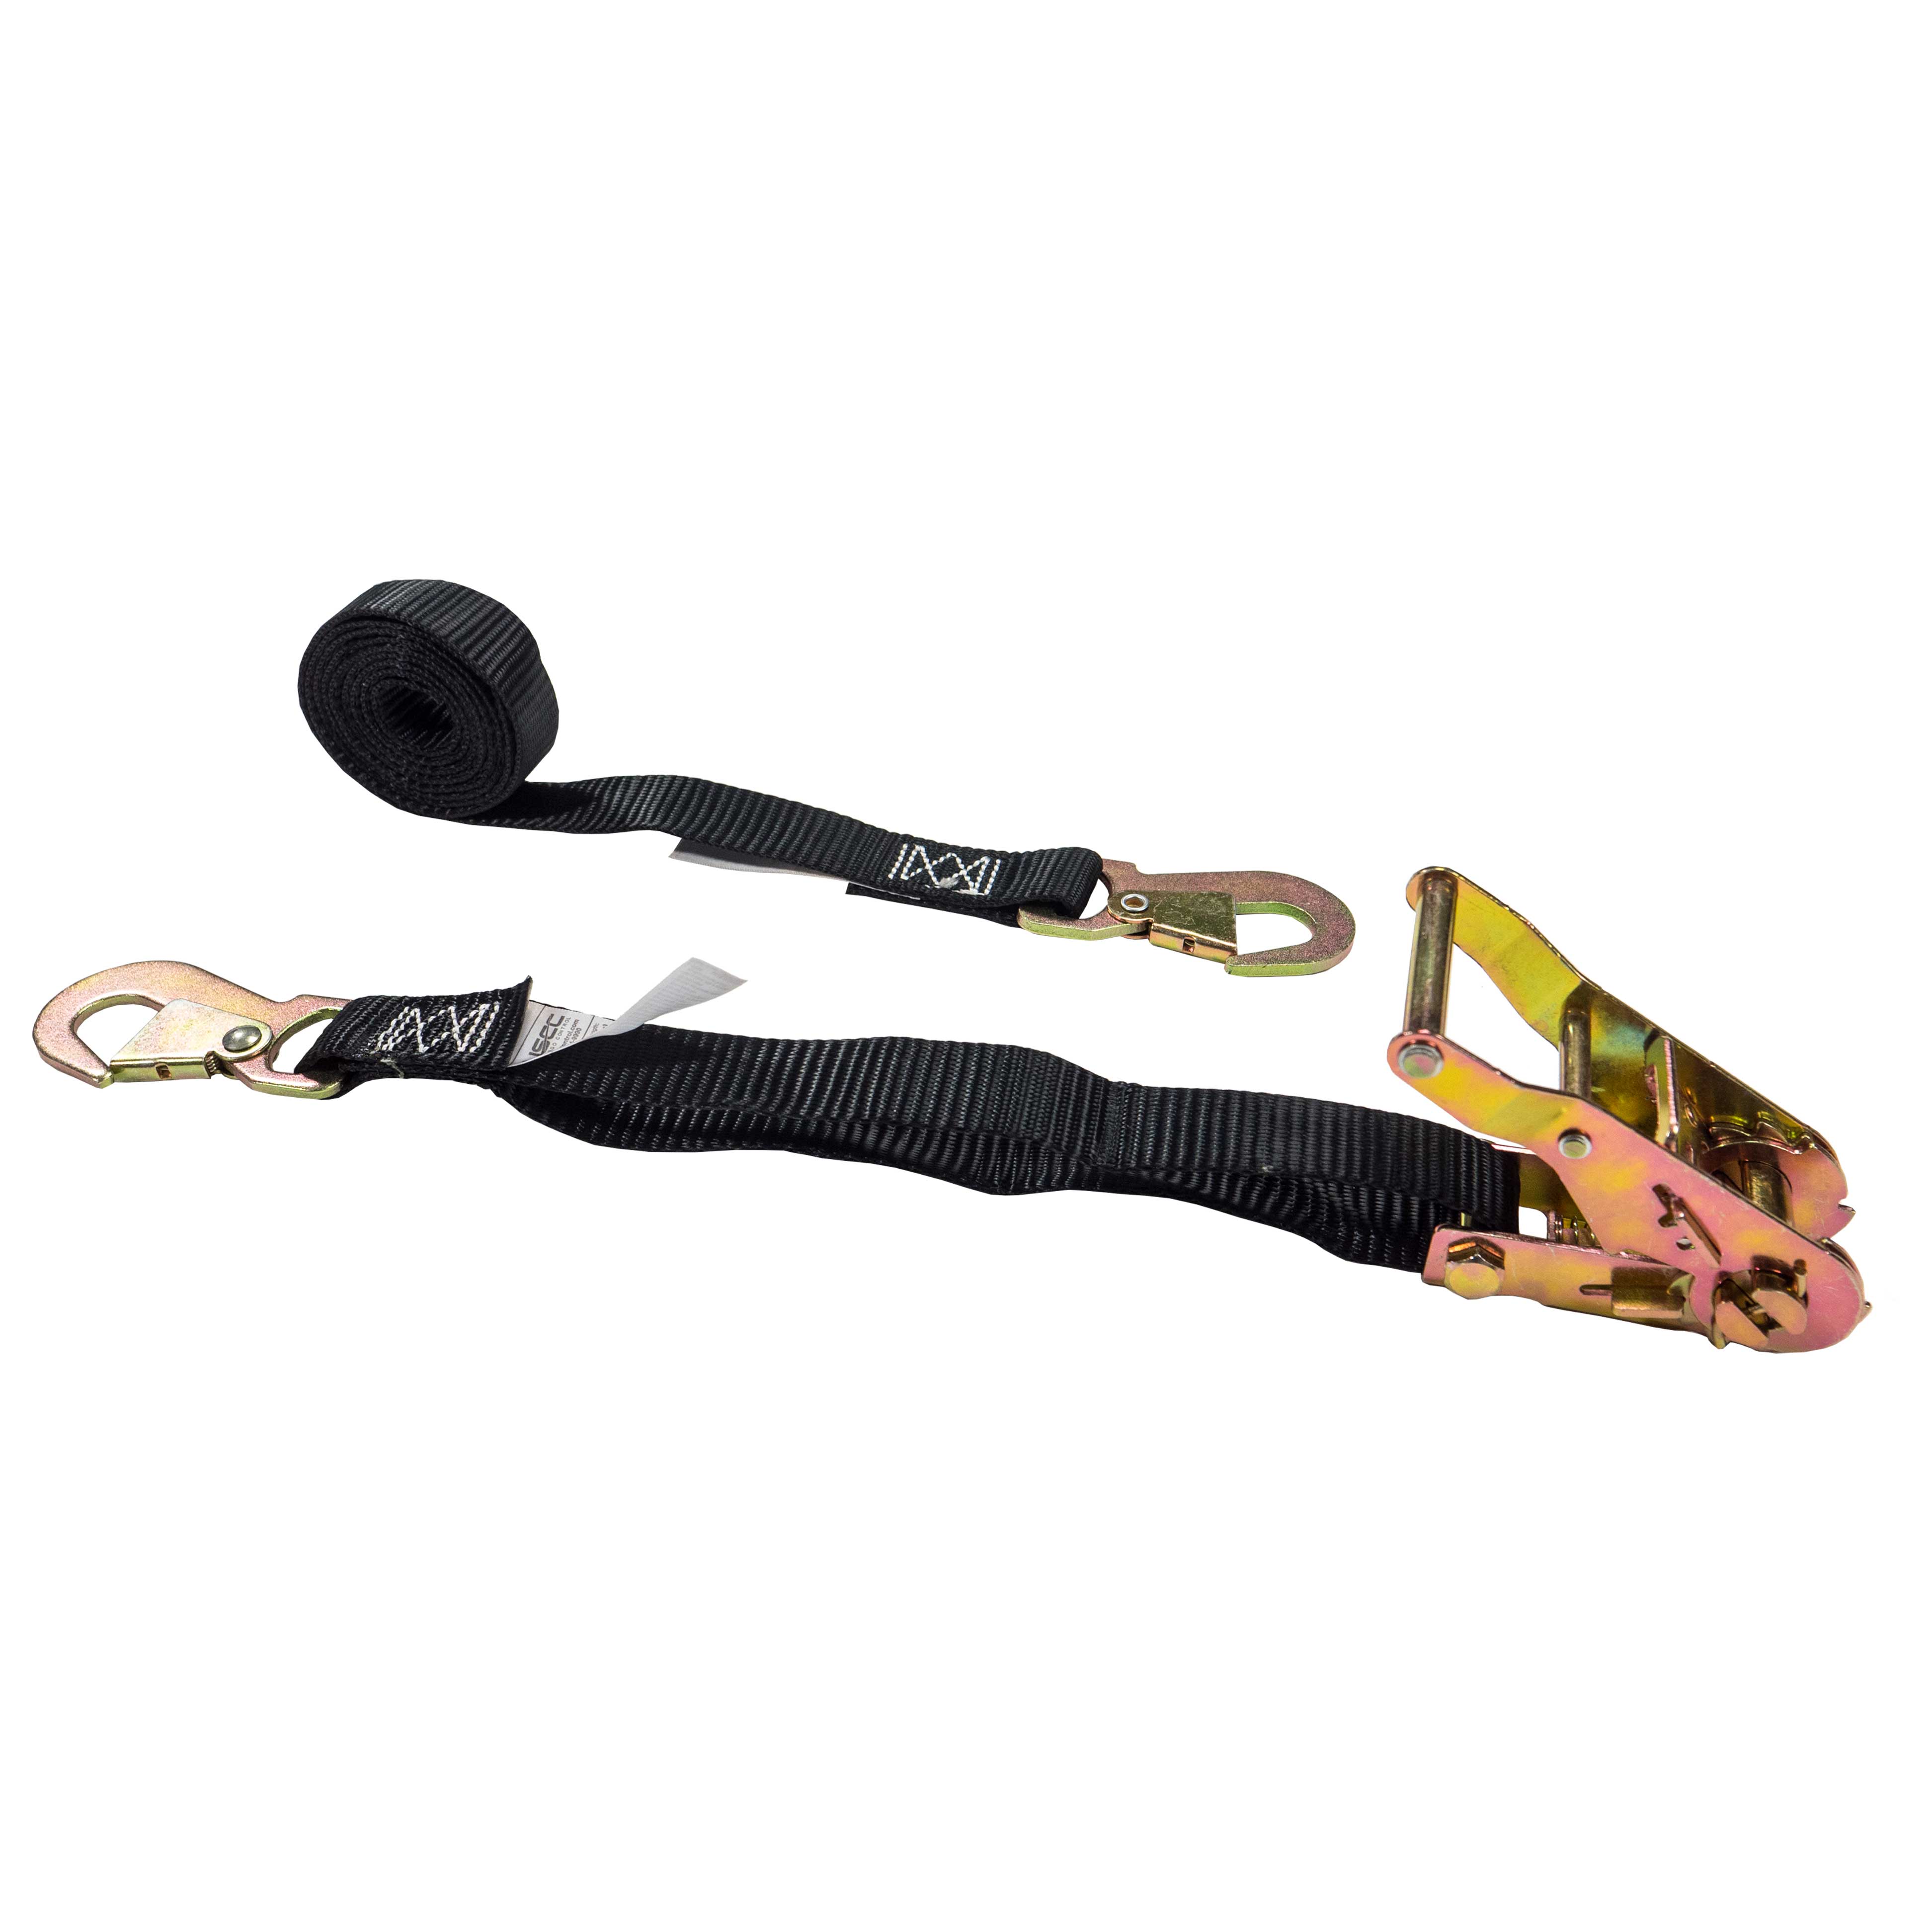 Motorcycle tie down straps -1x6' Ratchet Strap